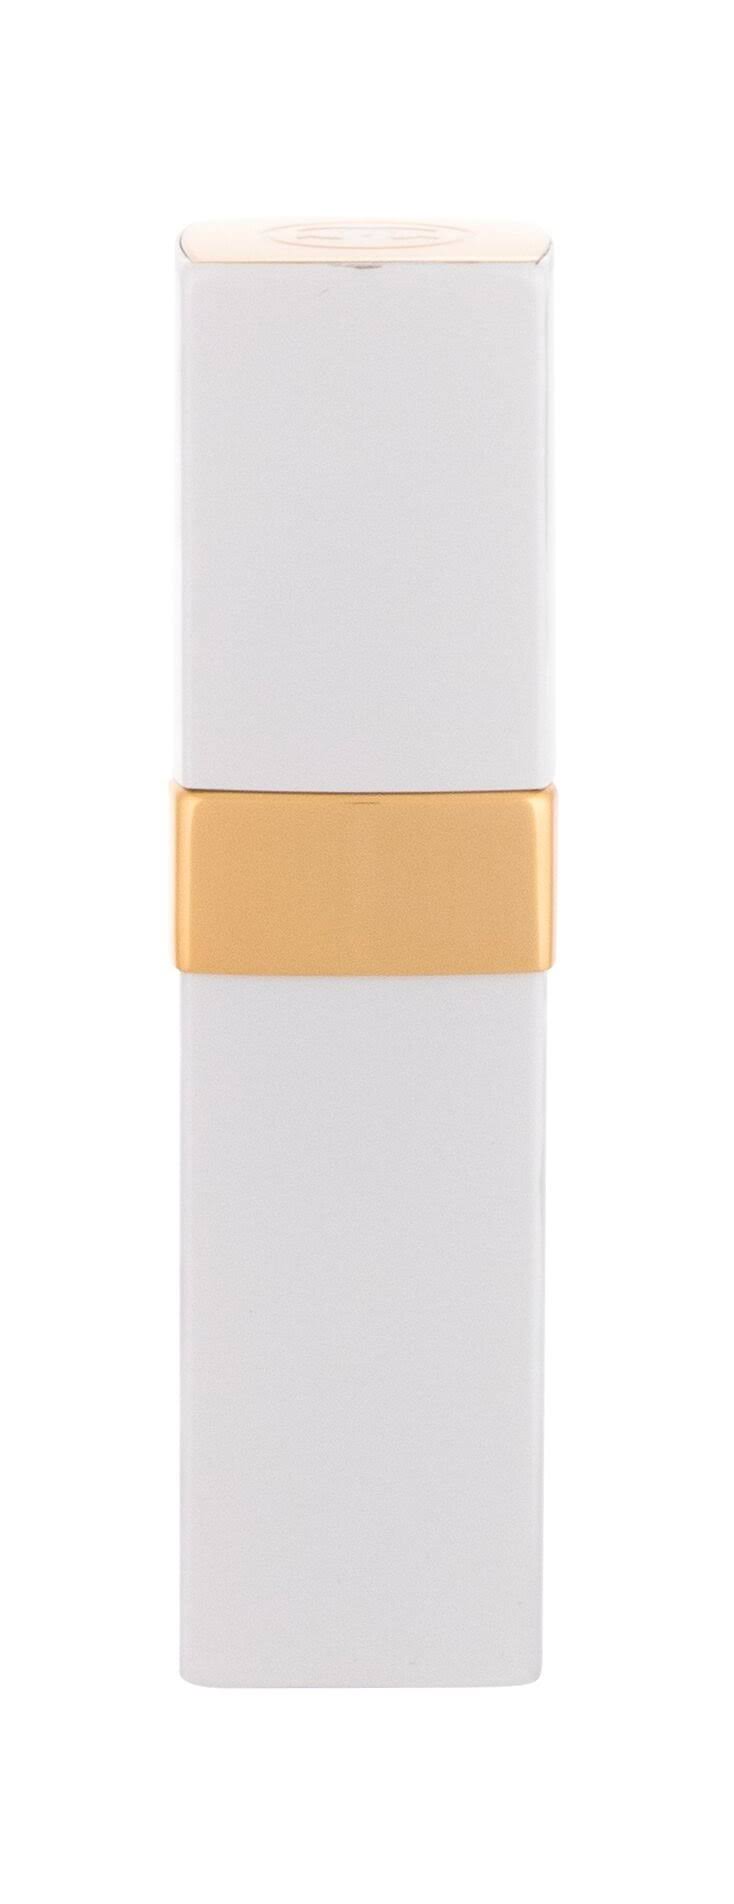 Chanel Coco Mademoiselle Parfum Spray - 7.5ml/0.25oz